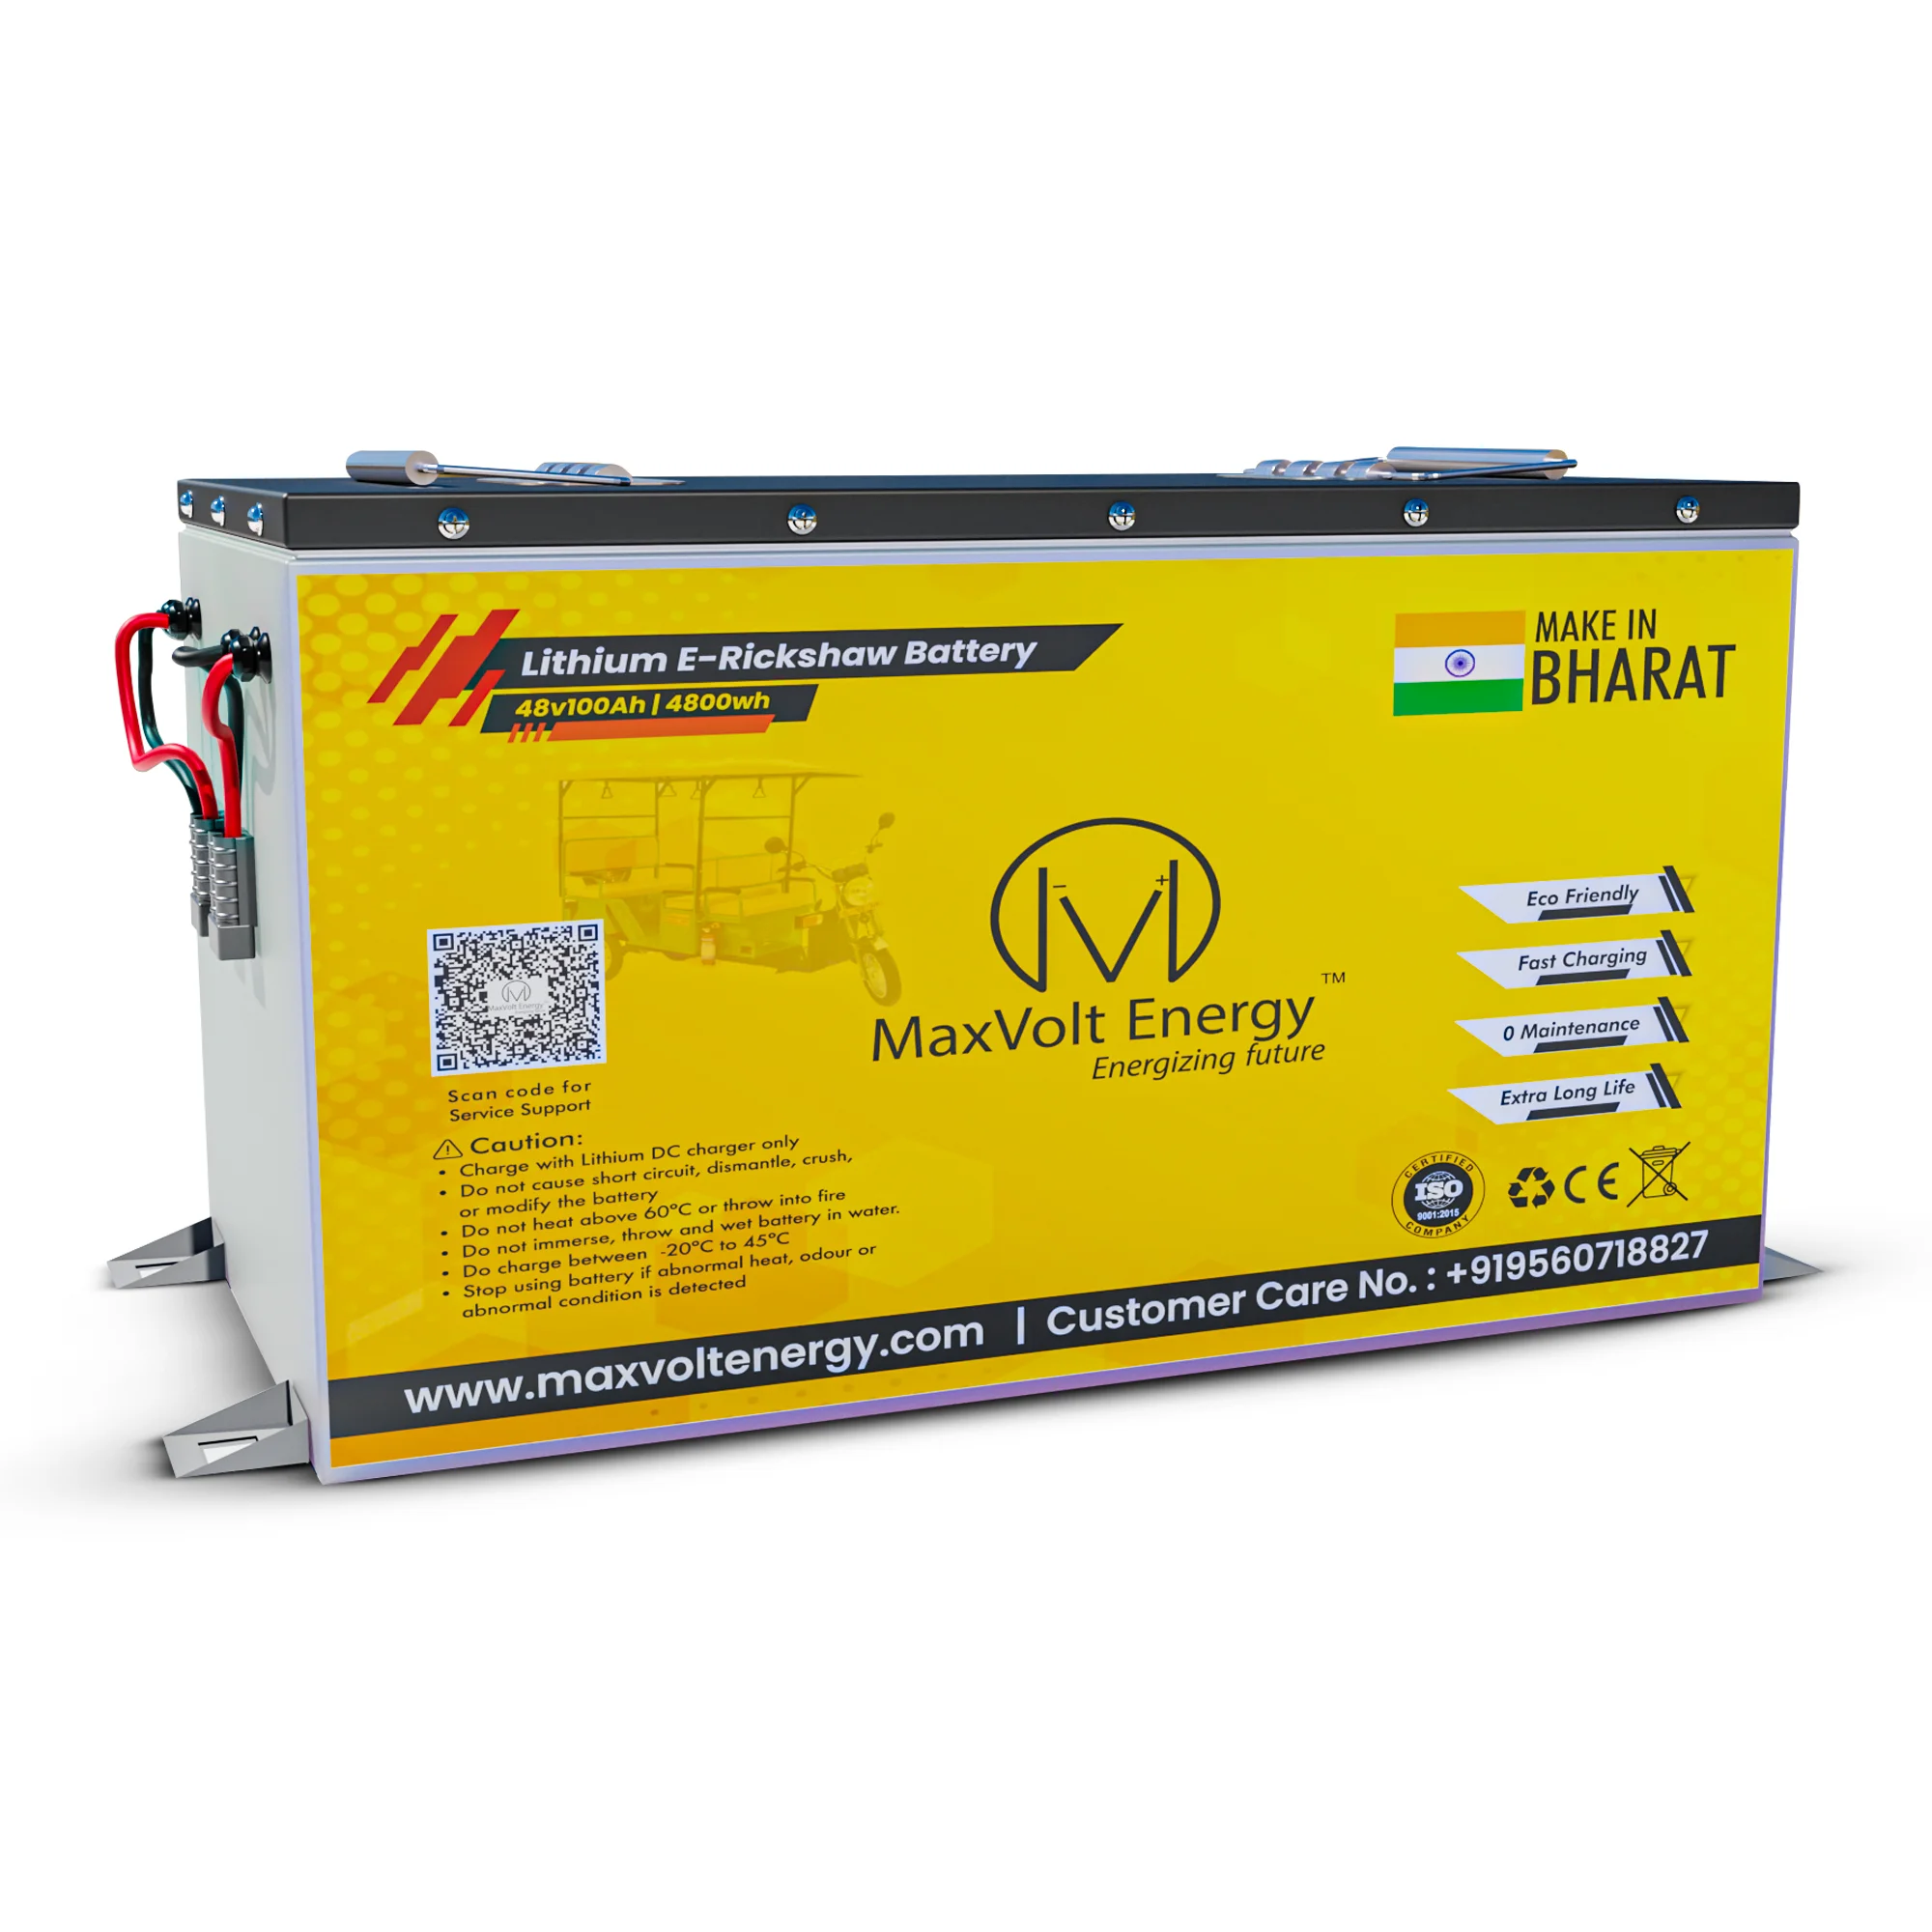 E-Rickshaw Lithium Battery